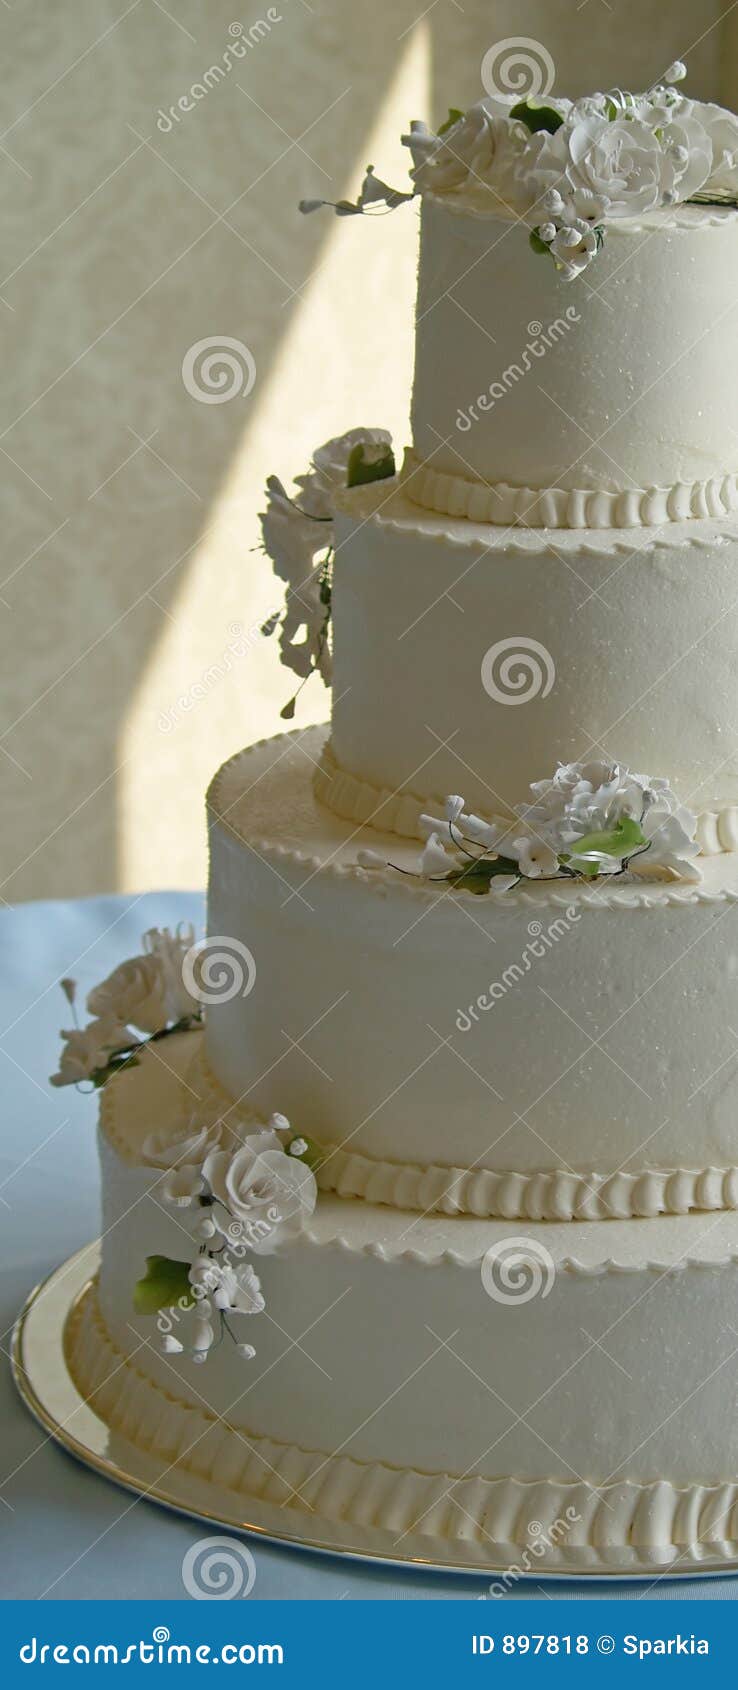 Wedding cake on a blue tablecloth